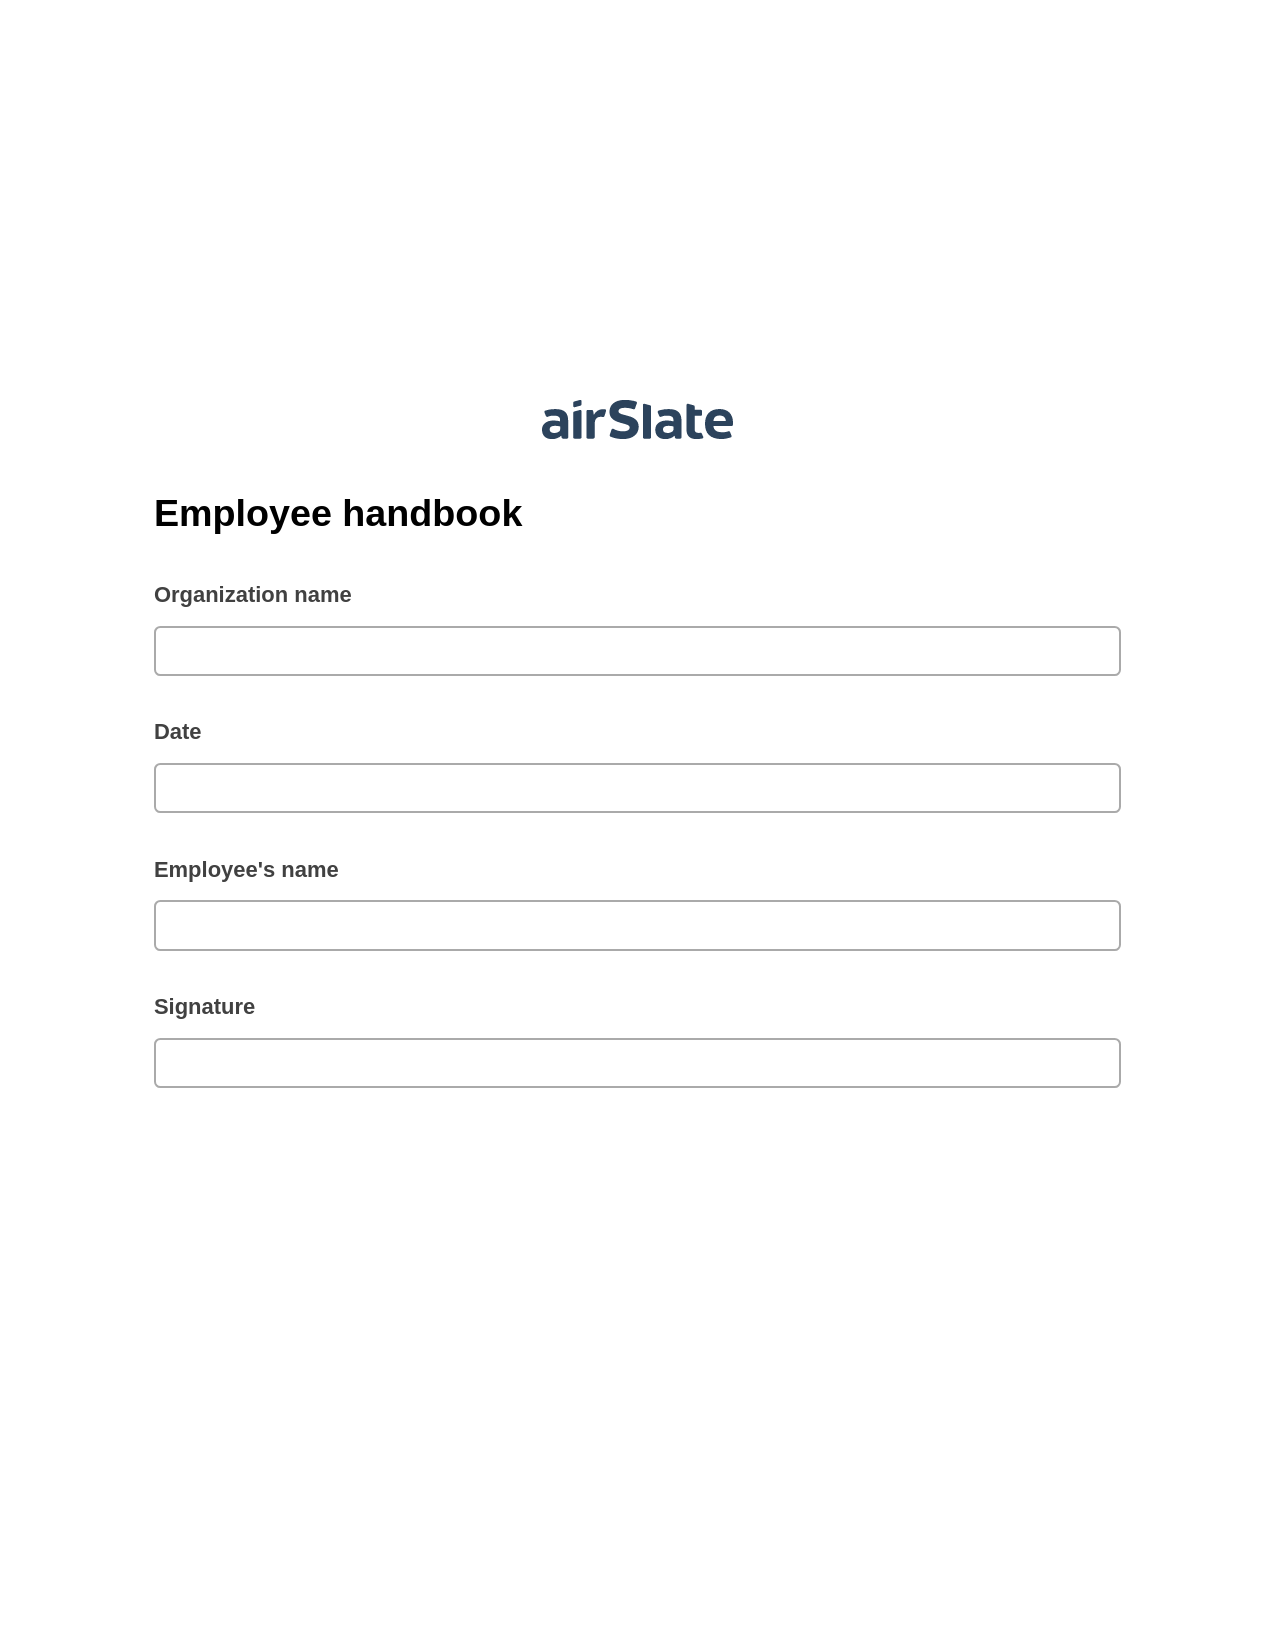 Employee handbook Pre-fill Slate from MS Dynamics 365 Records Bot, Google Sheet Two-Way Binding Bot, Google Drive Bot